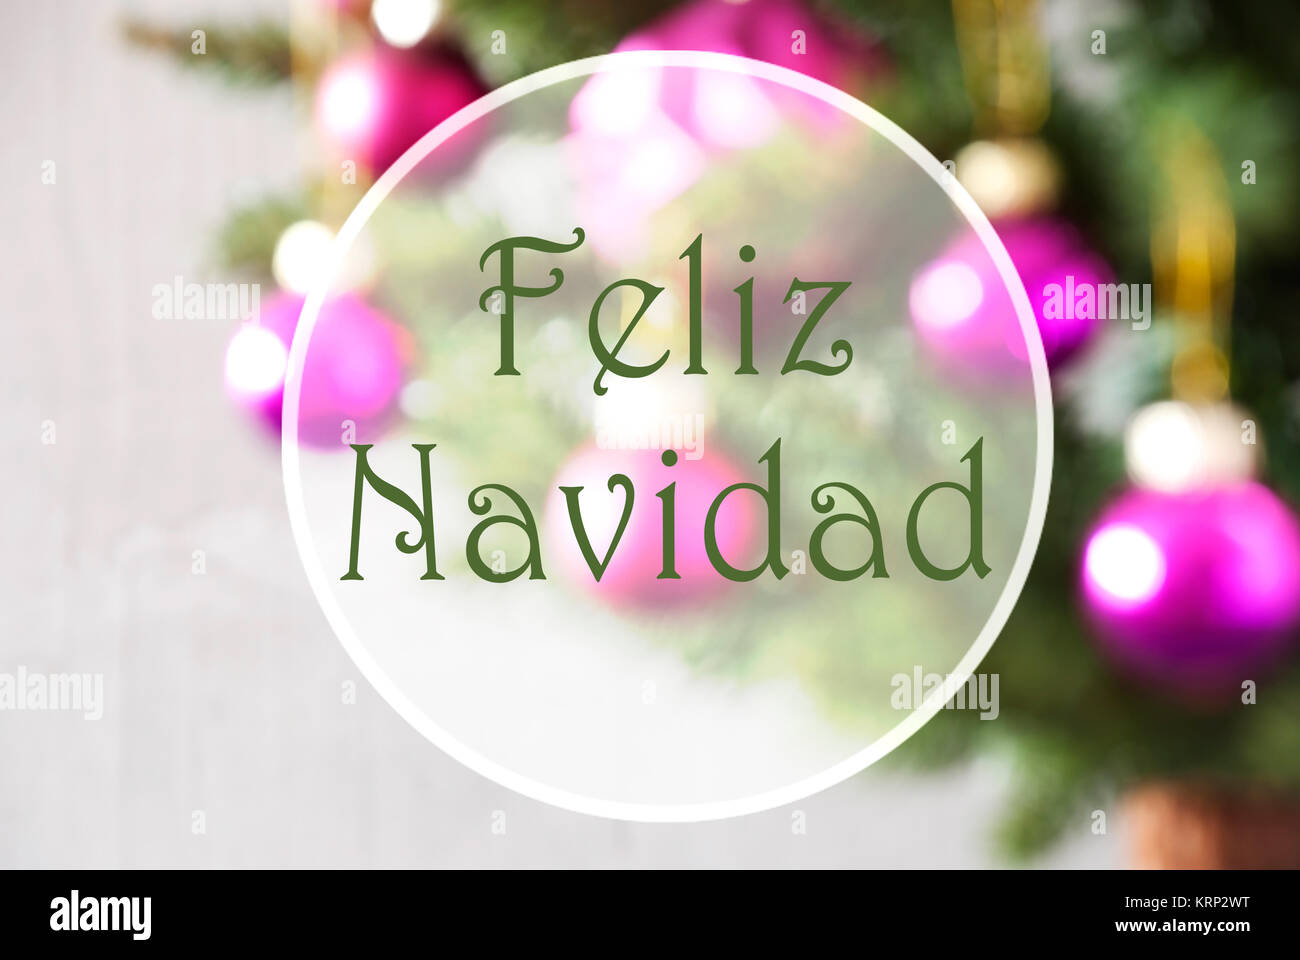 Spanish Text Feliz Navidad Means Merry Christmas Christmas Tree With Stock Photo Alamy